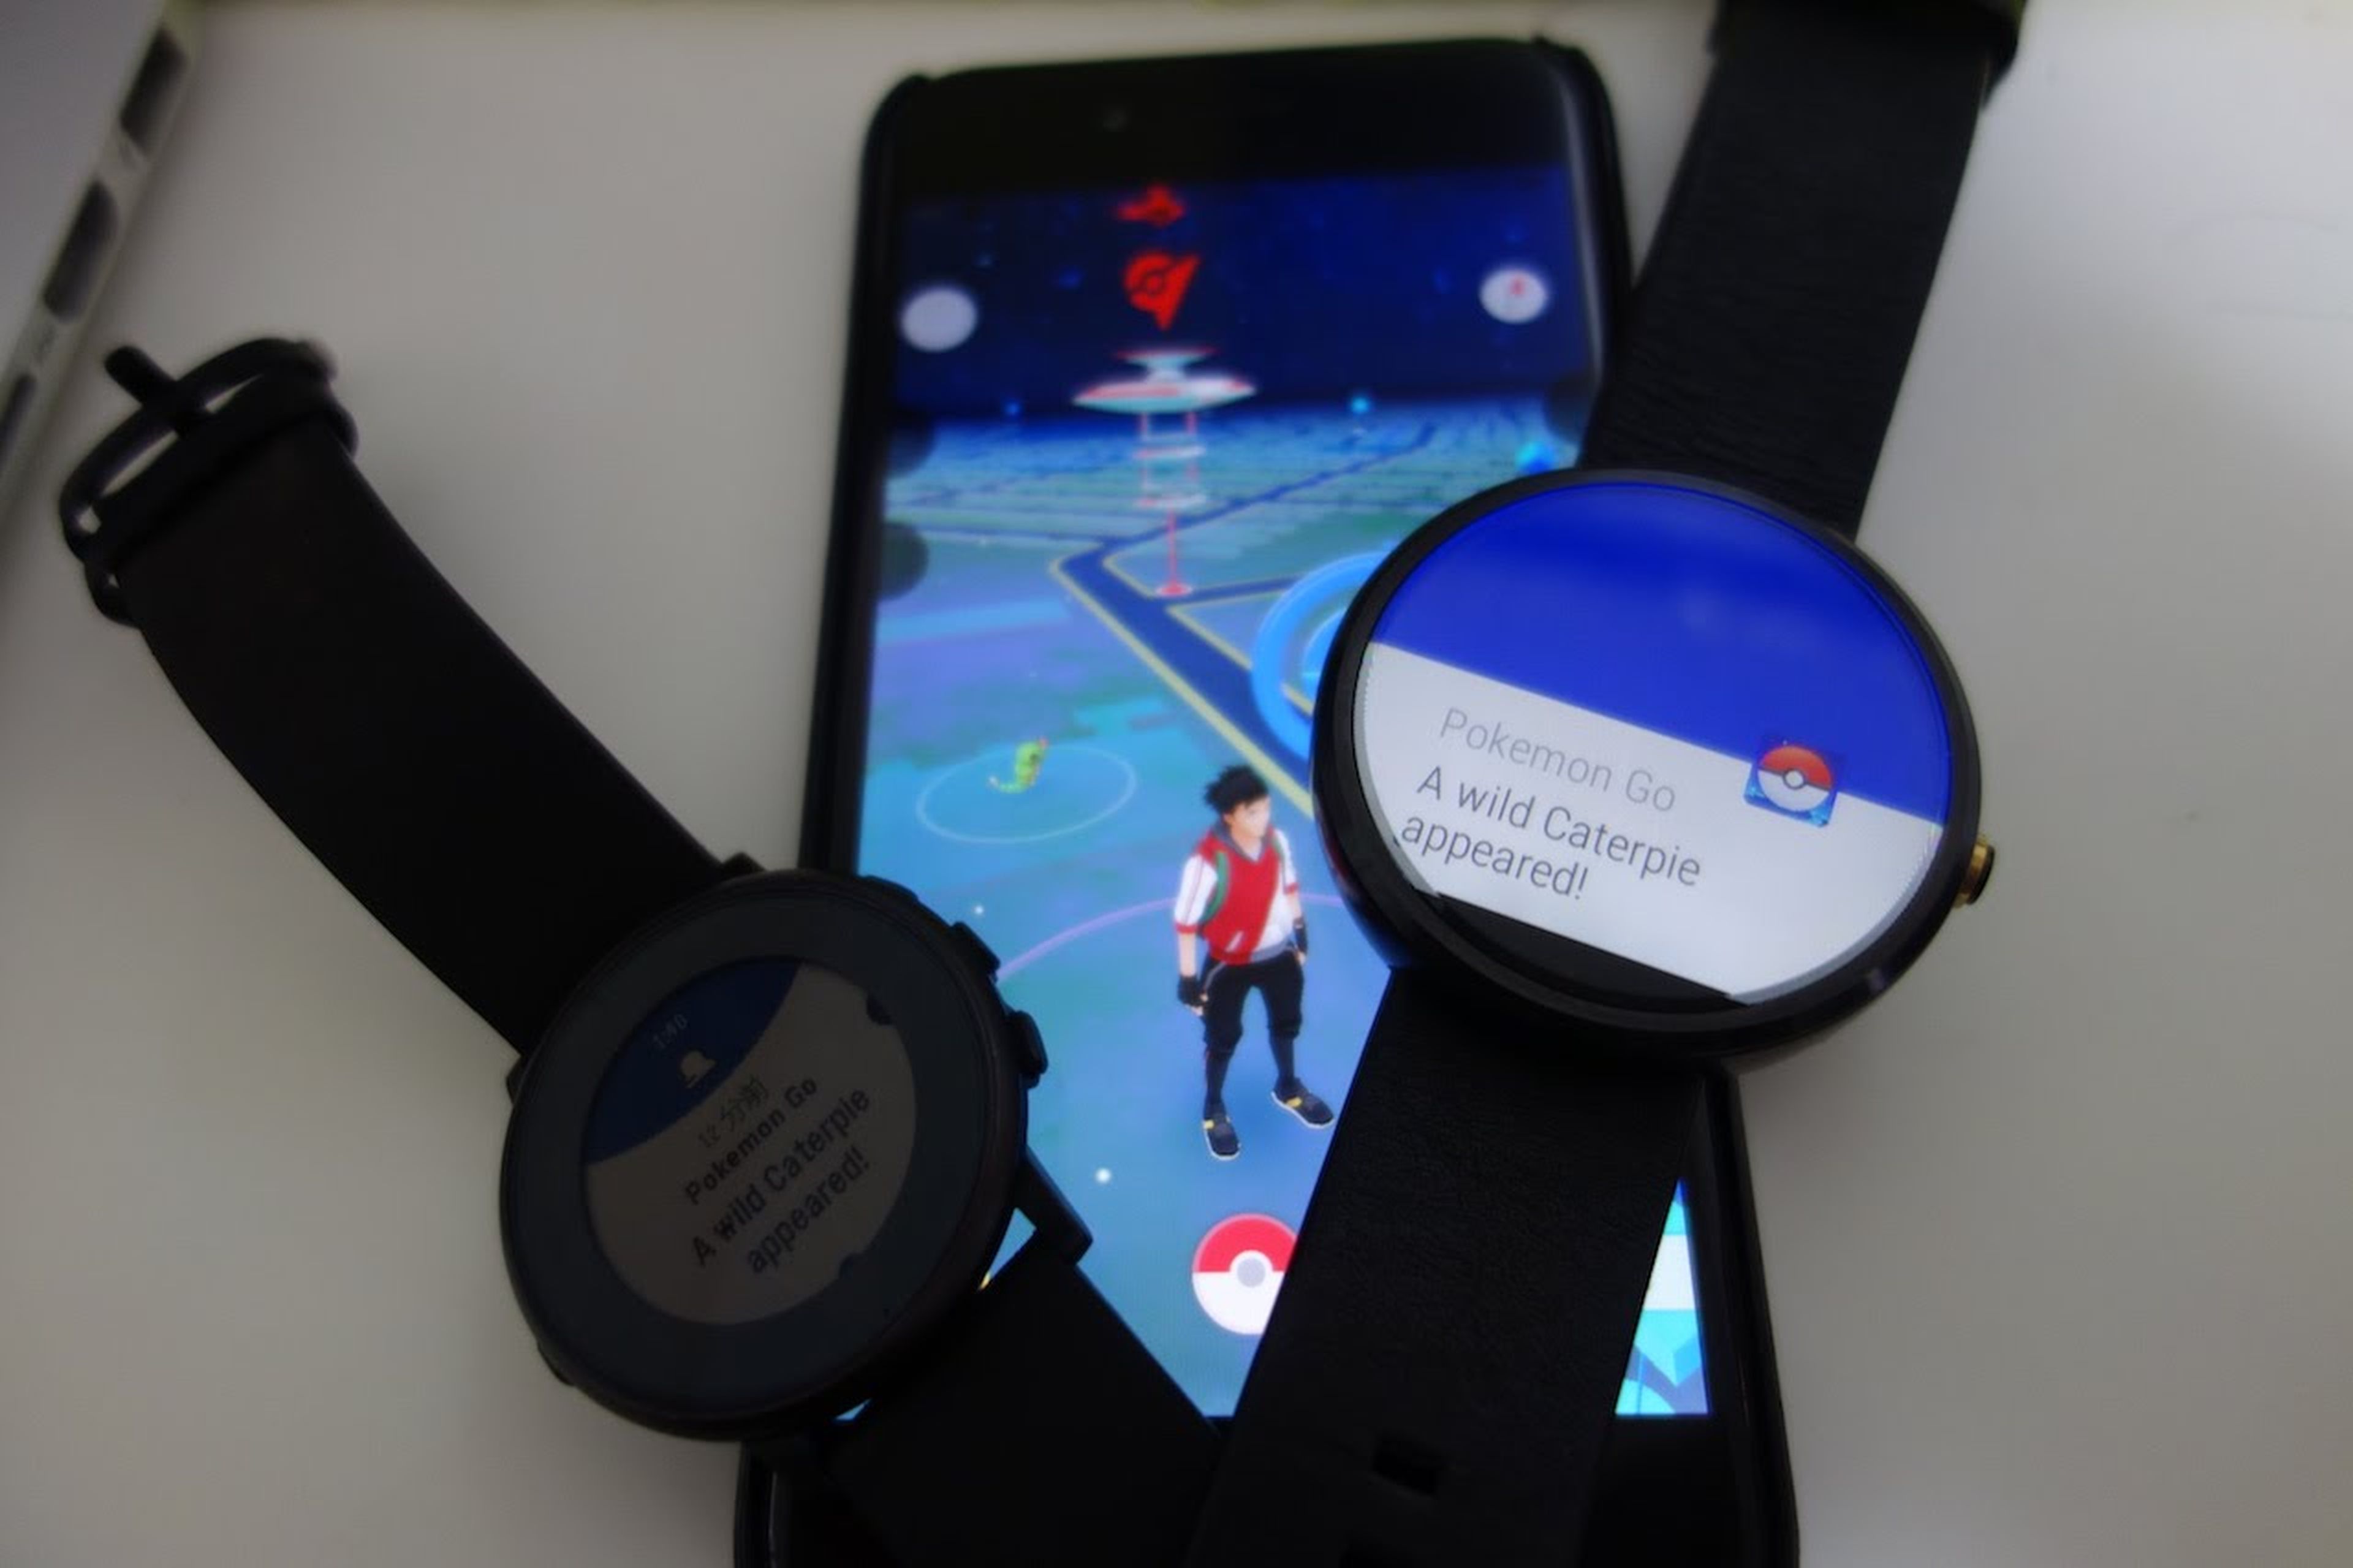 Pokémon Go - Android Smartwatch